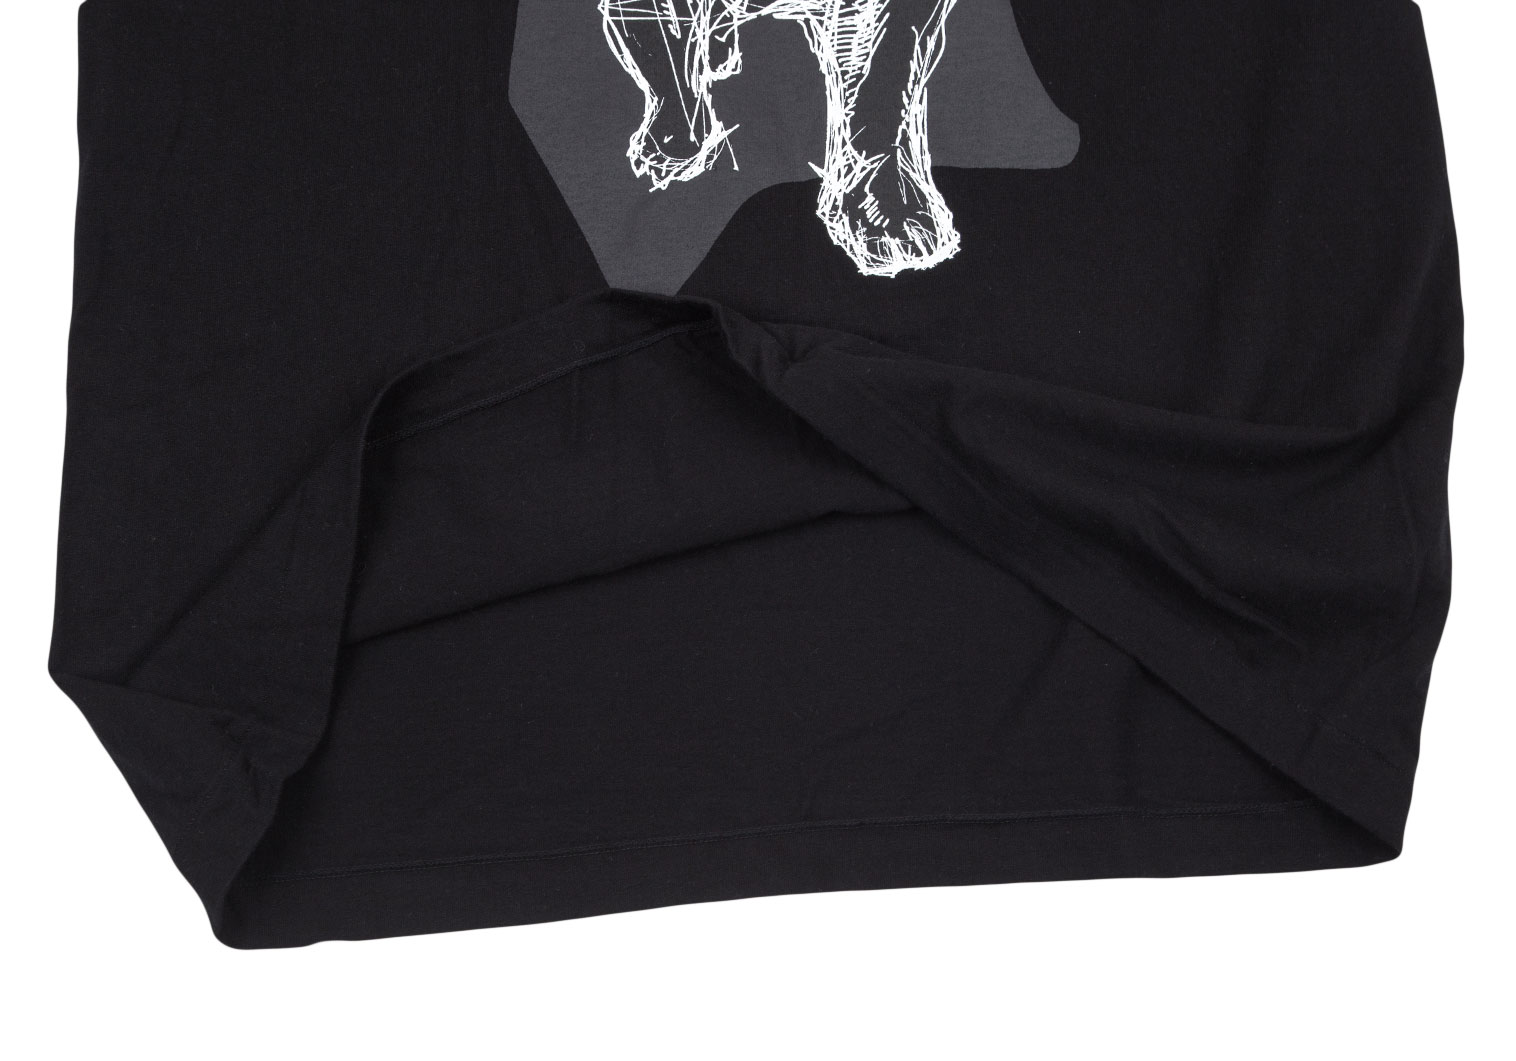 Yohji Yamamoto NOIR Yuuka Asakura Printed T-shirt Black 3 | PLAYFUL